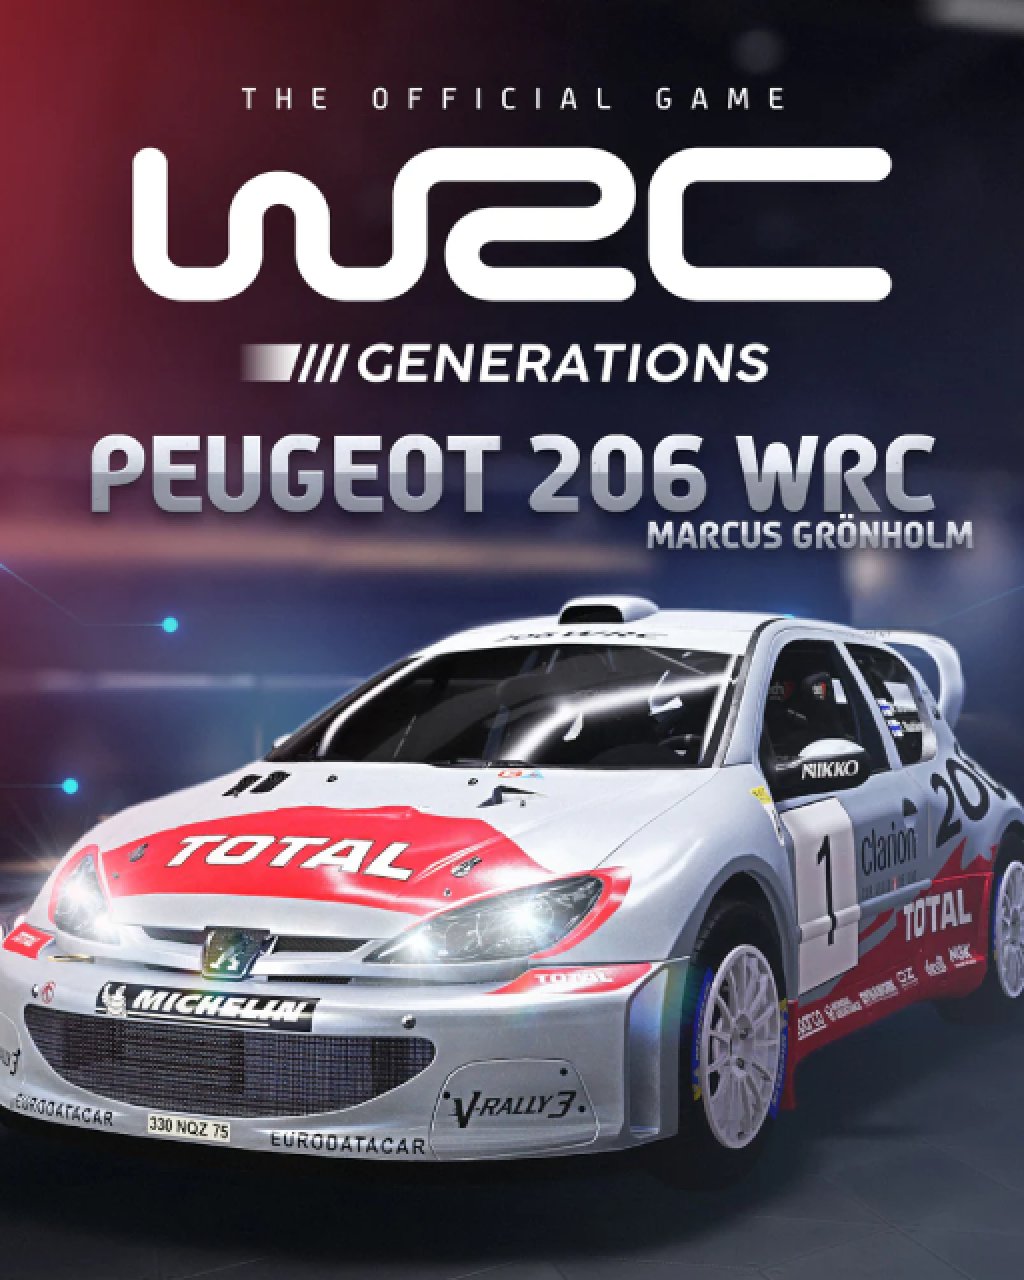 ESD WRC Generations Peugeot 206 WRC 2002